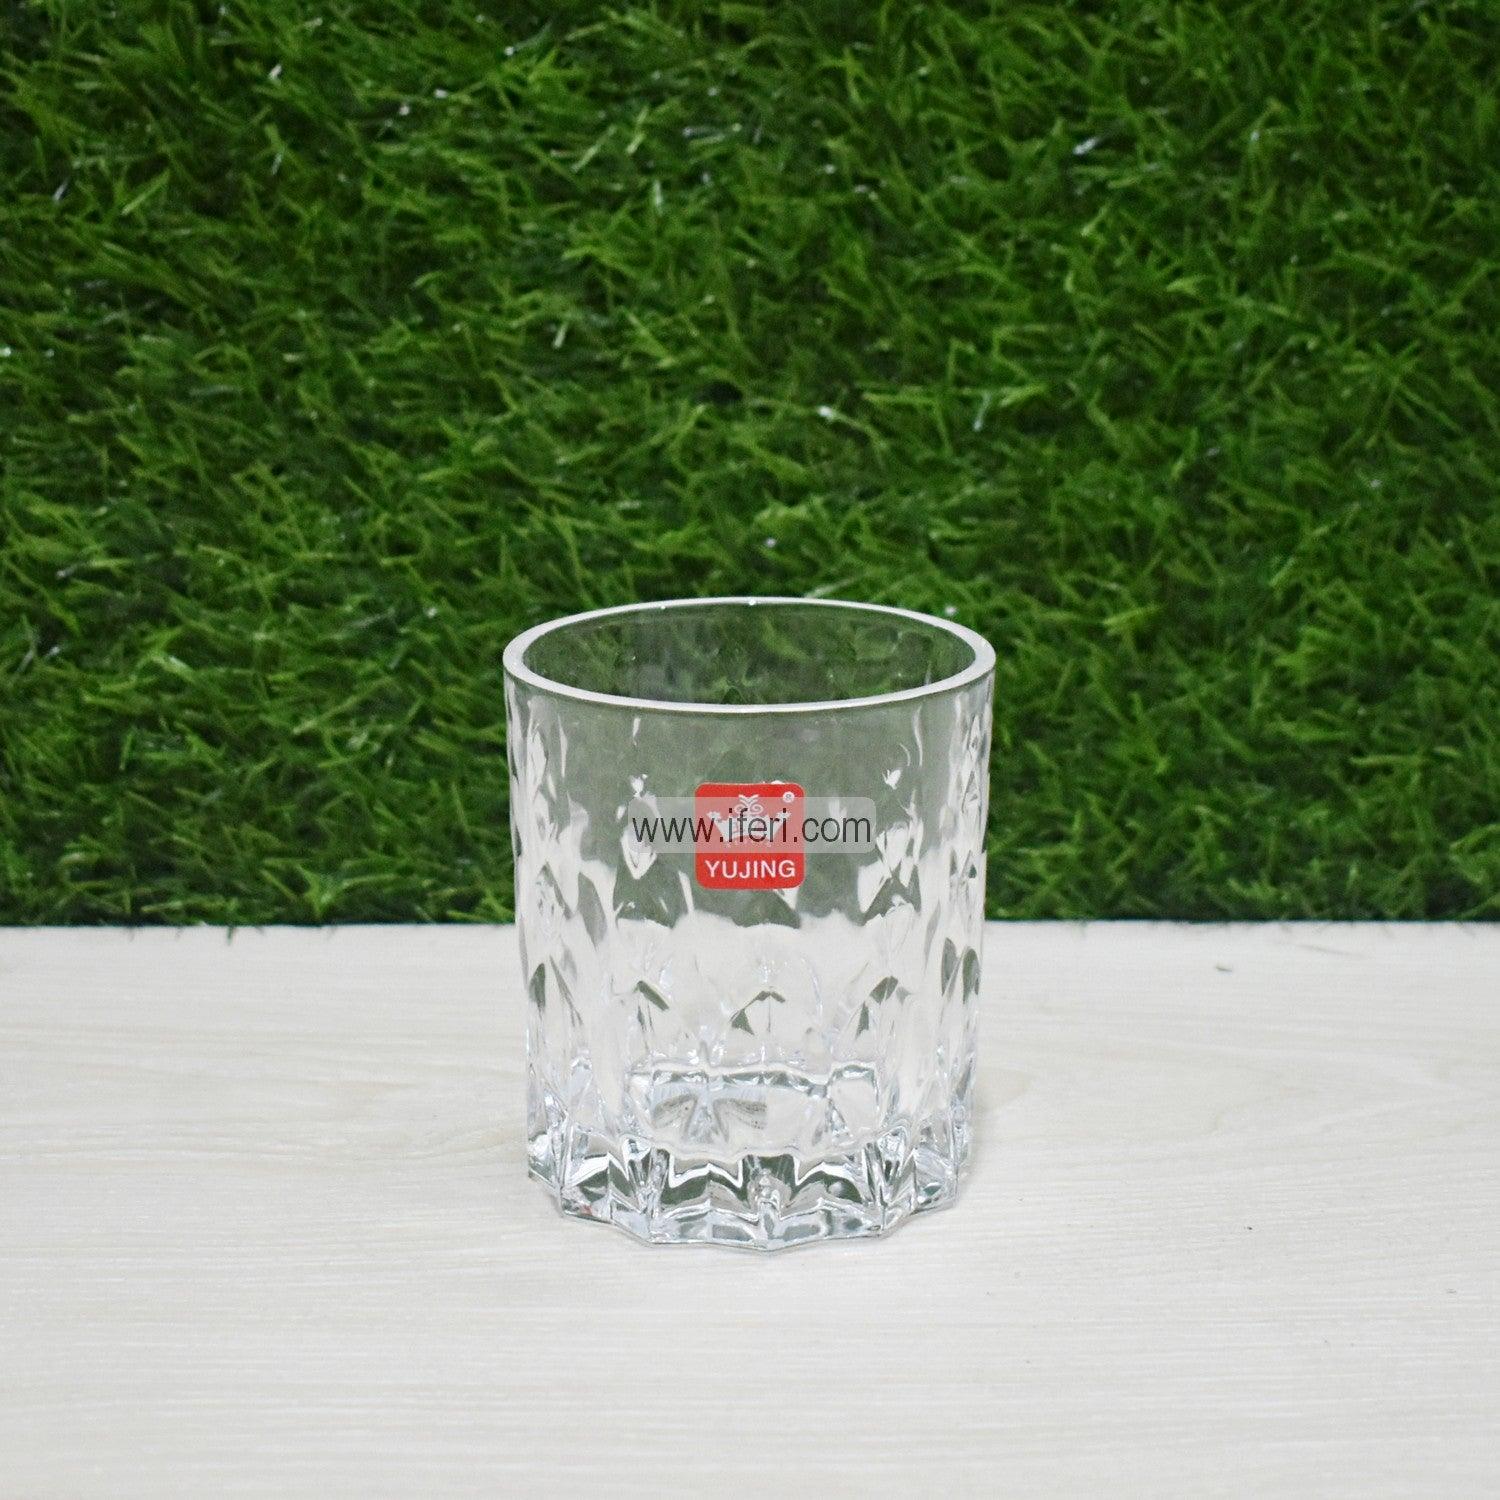 6 Pcs Water Juice Glass RH8299 Price in Bangladesh - iferi.com